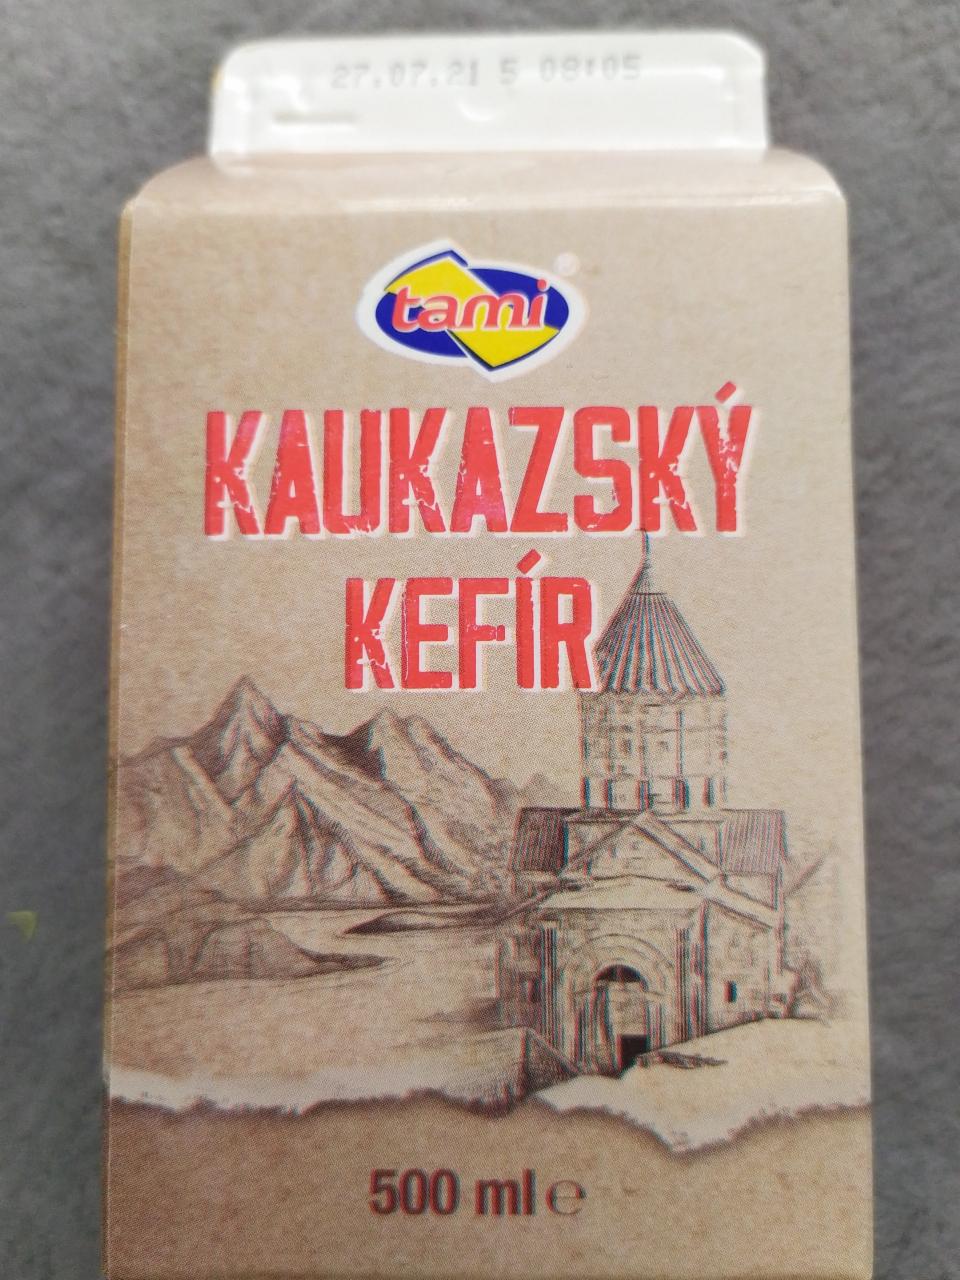 Фото - кефир 3.4% kefir kaukazky Tami